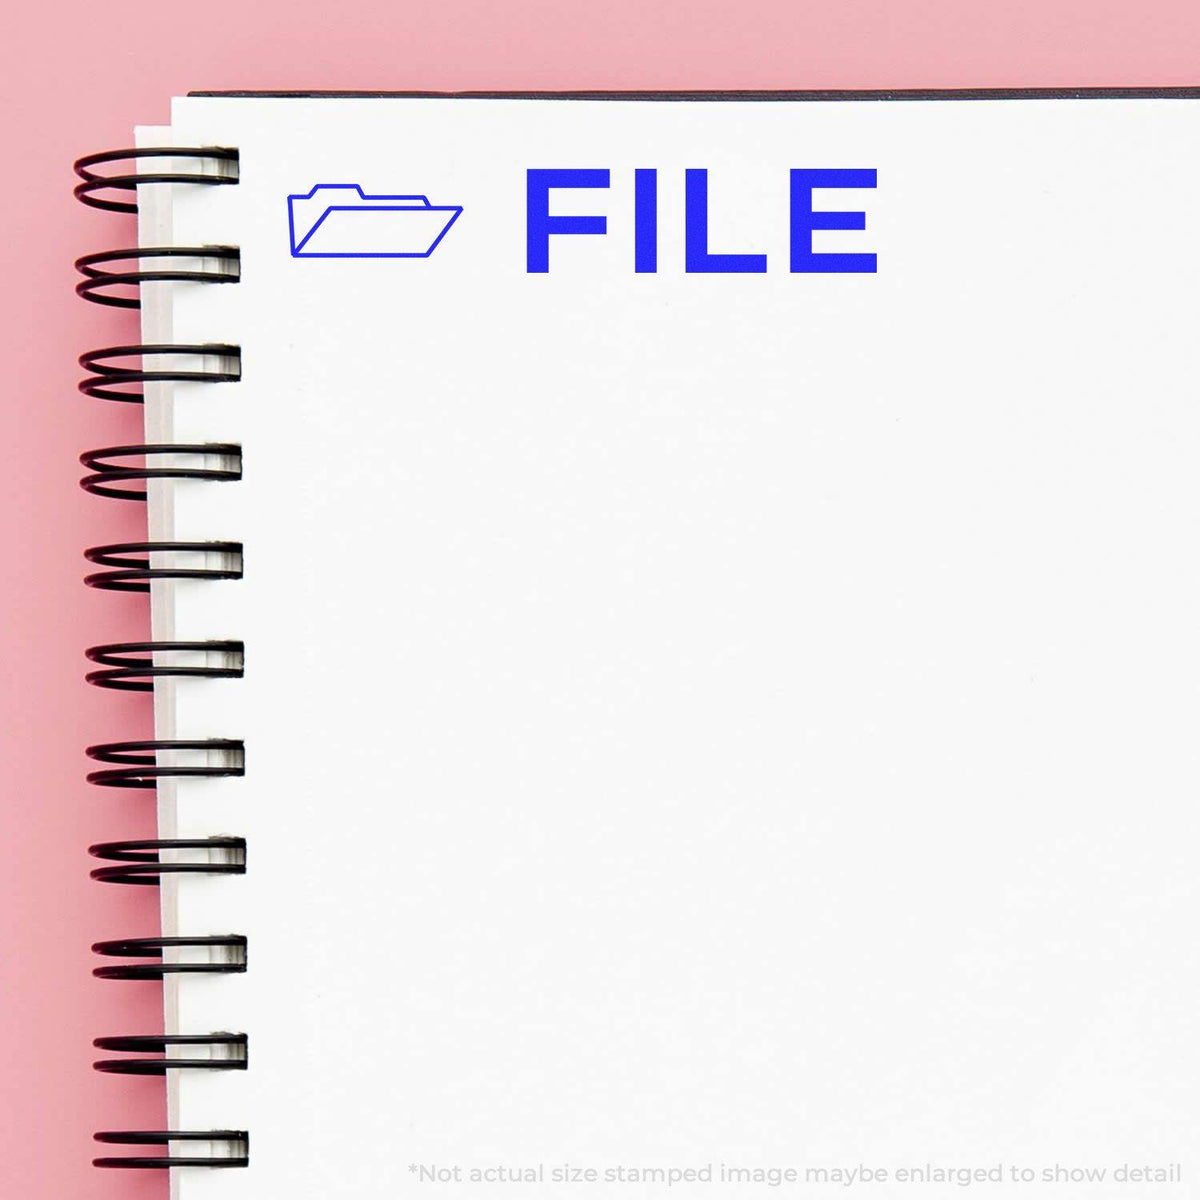 In Use Slim Pre-Inked File with Envelope Stamp Image